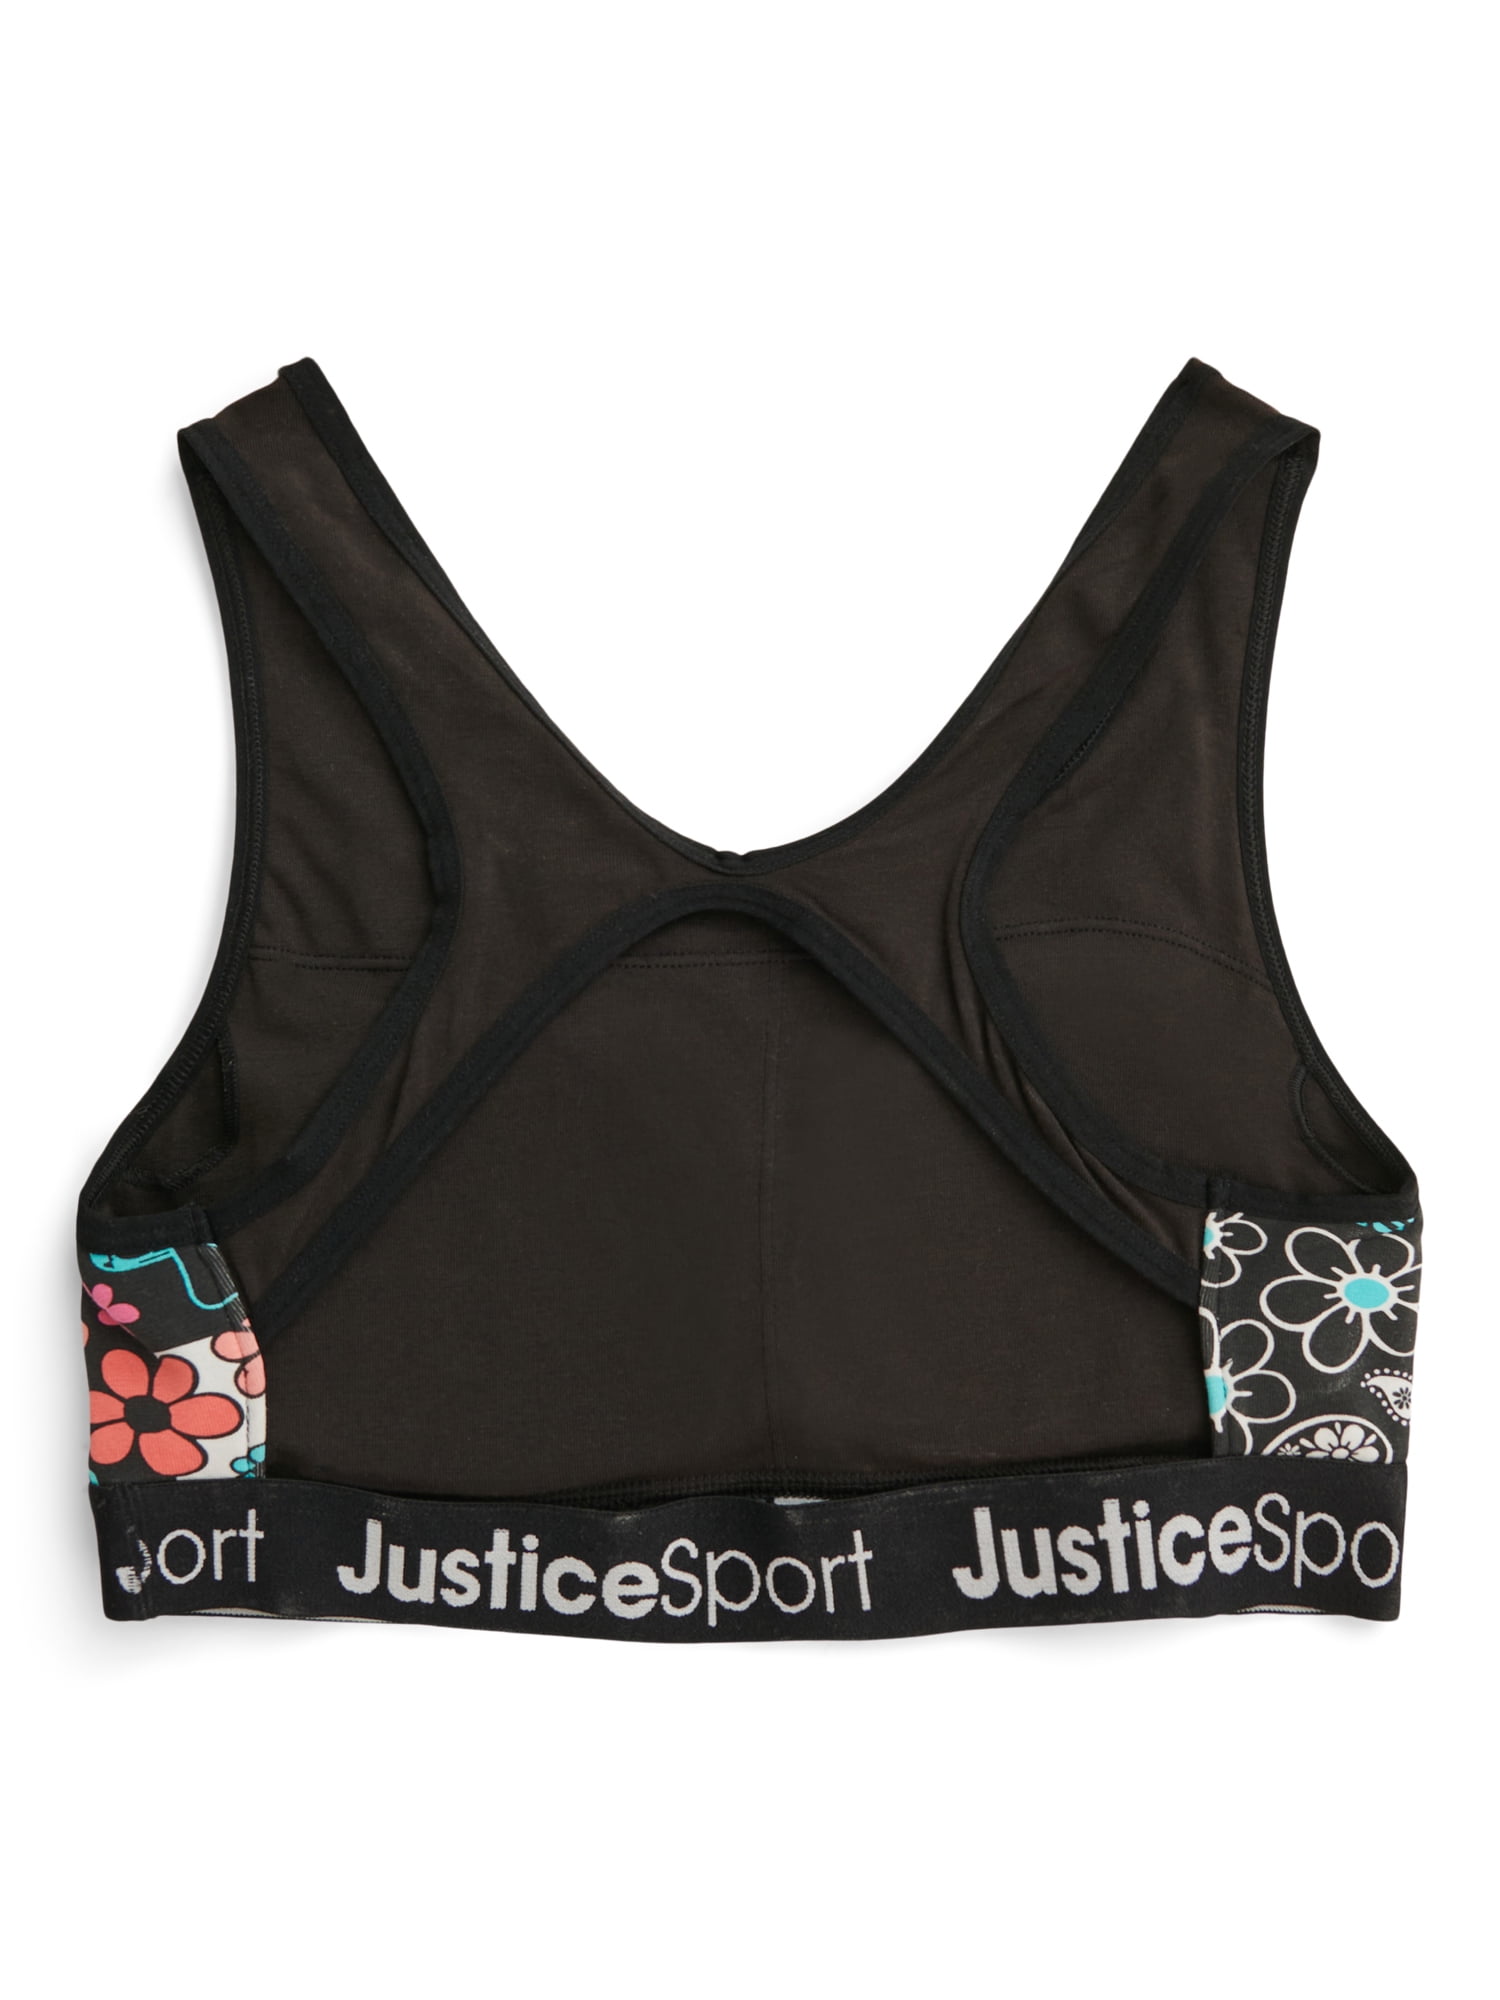 Girls Justice Sports Bra Size 28 Gray